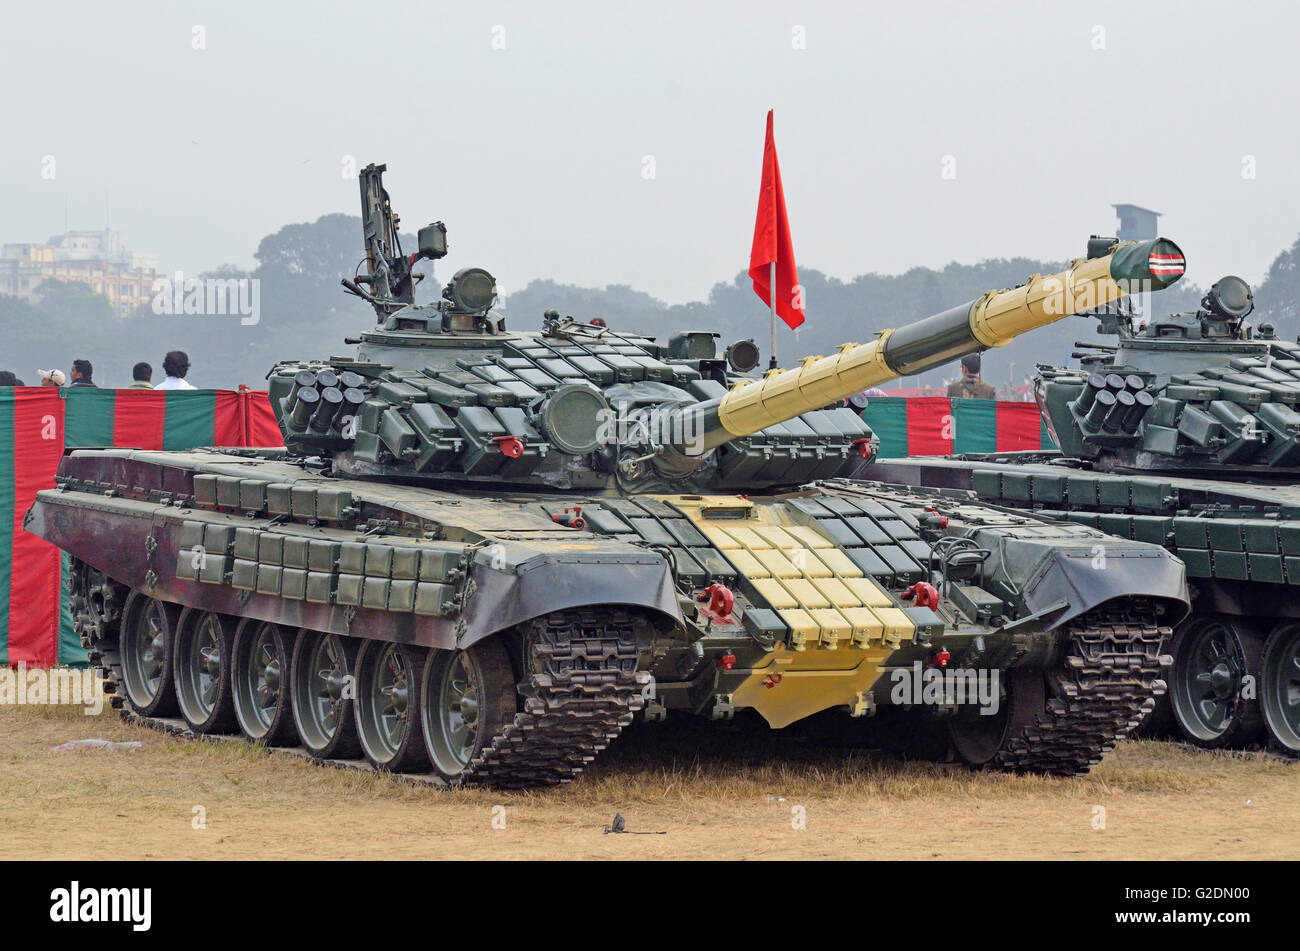 T 72m Main Battle Tanks Of The Indian Army Kolkata West Bengal India Stock Photo Alamy